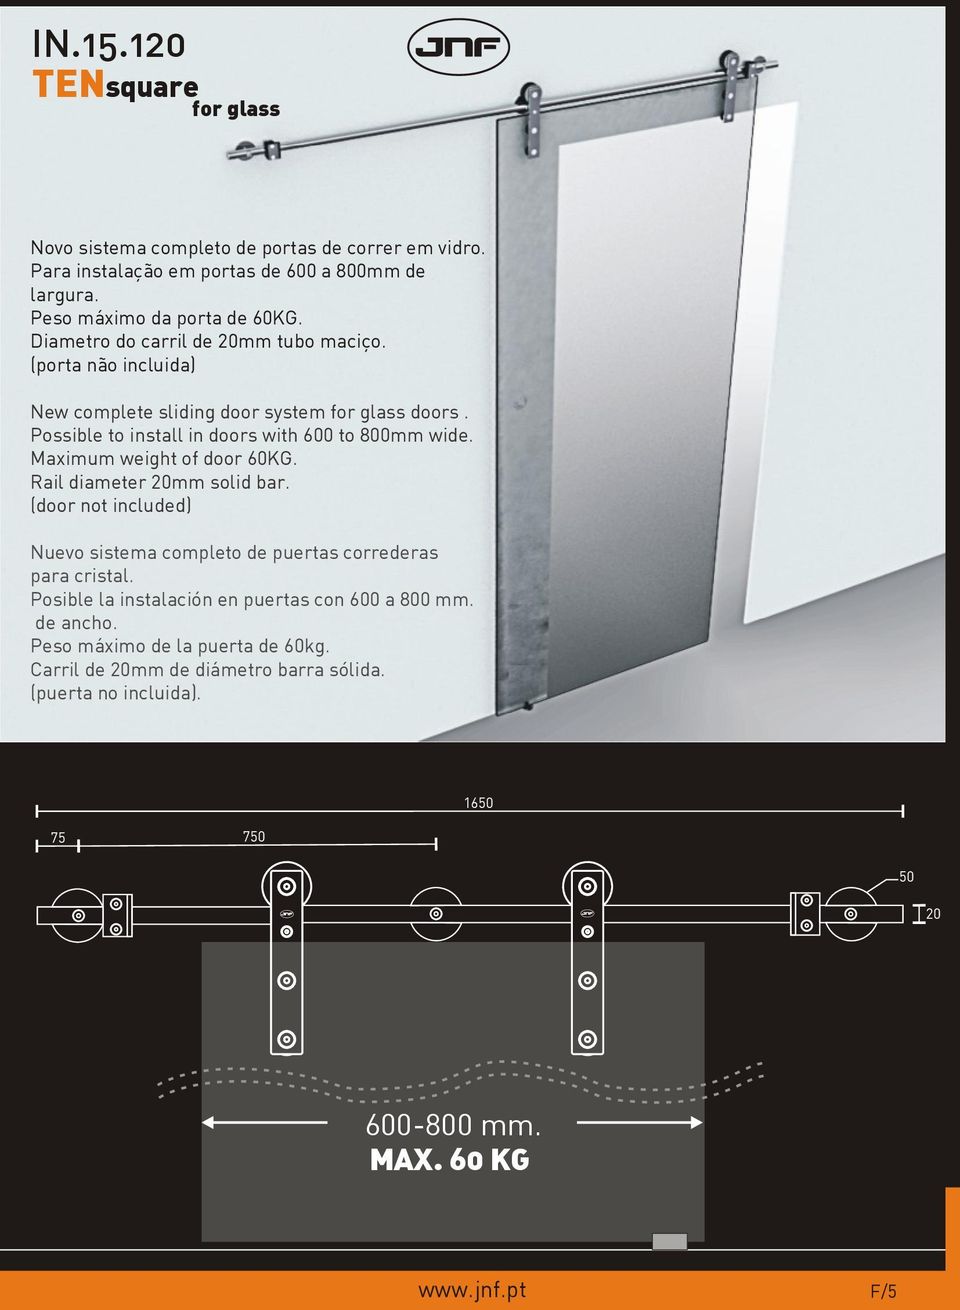 Maximum weight of door 60KG. Rail diameter 20mm solid bar. (door not included) Nuevo sistema completo de puertas correderas para cristal.